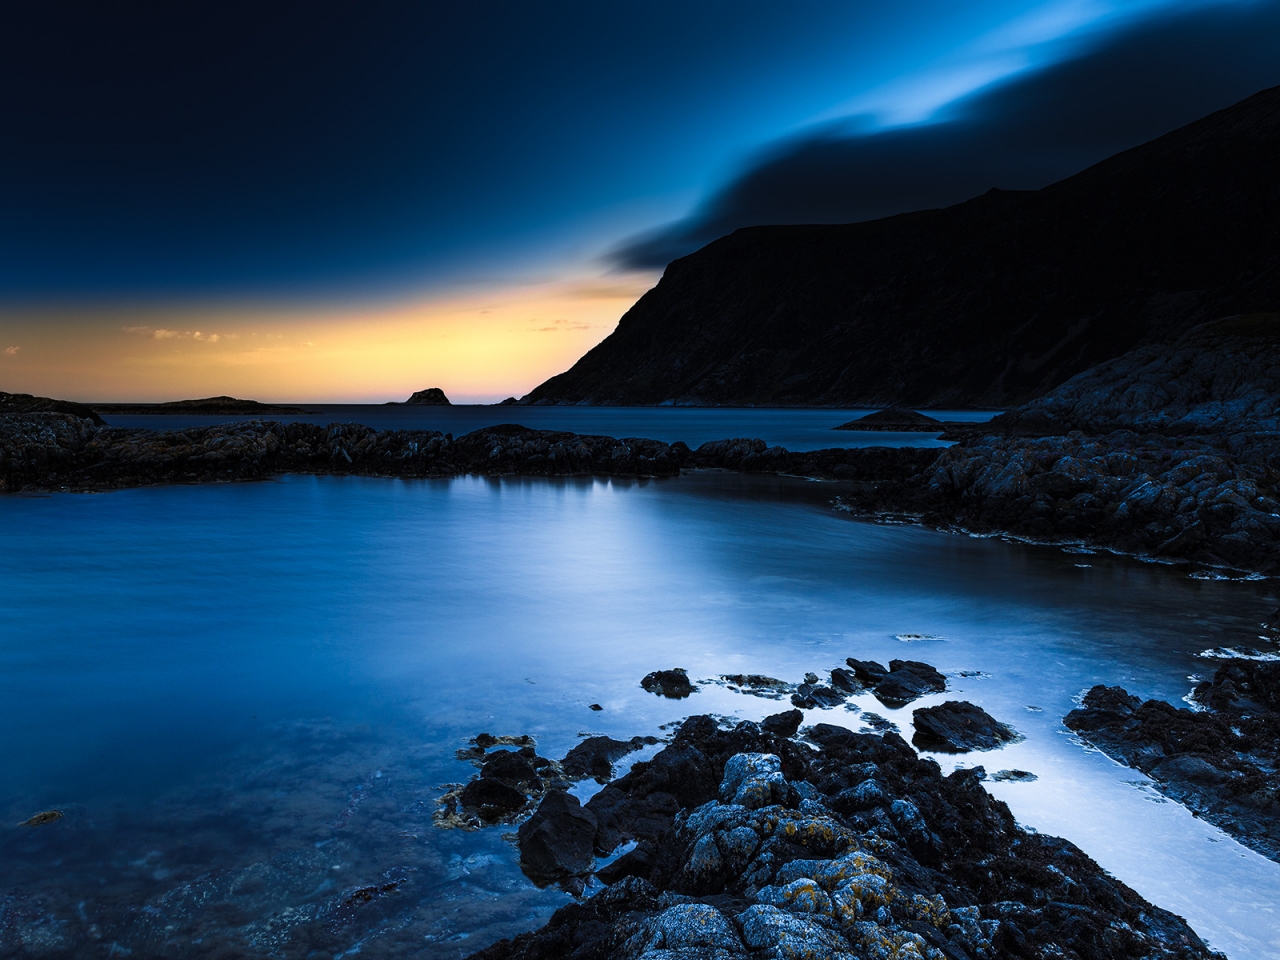 Deep Blue Night for 1280 x 960 resolution